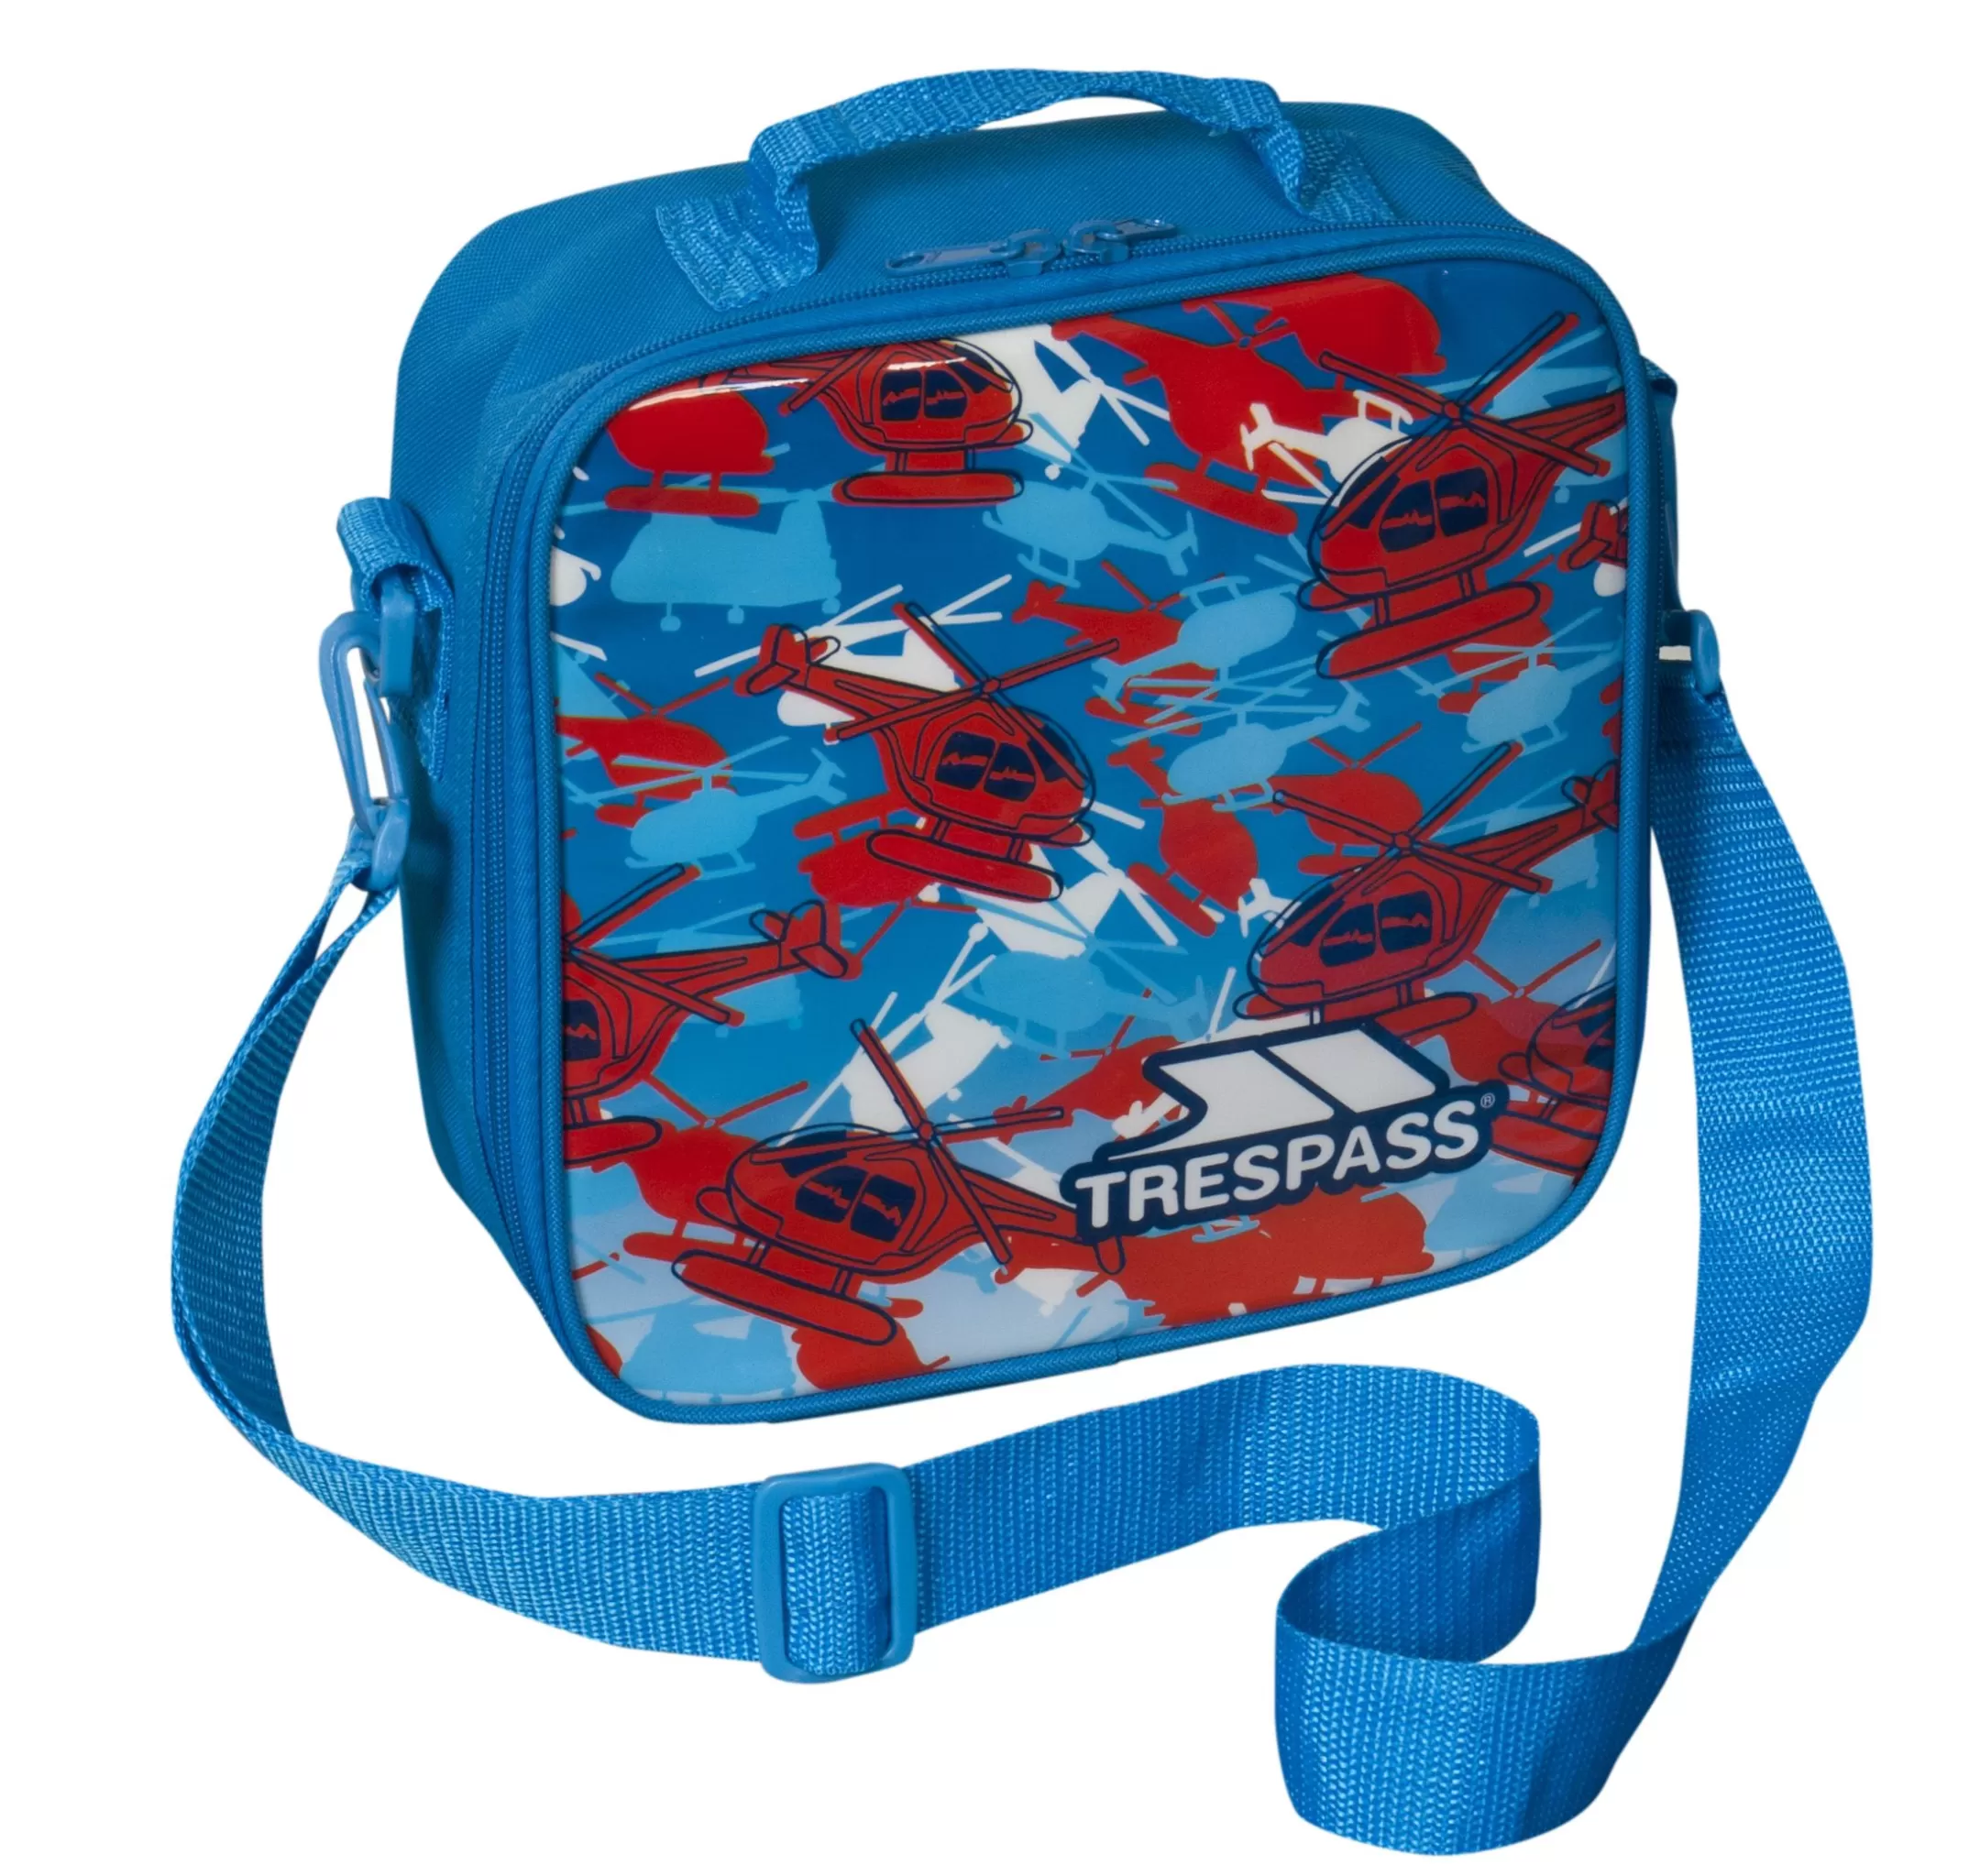 Playpiece Kids' Lunch Bag | Trespass Best Sale